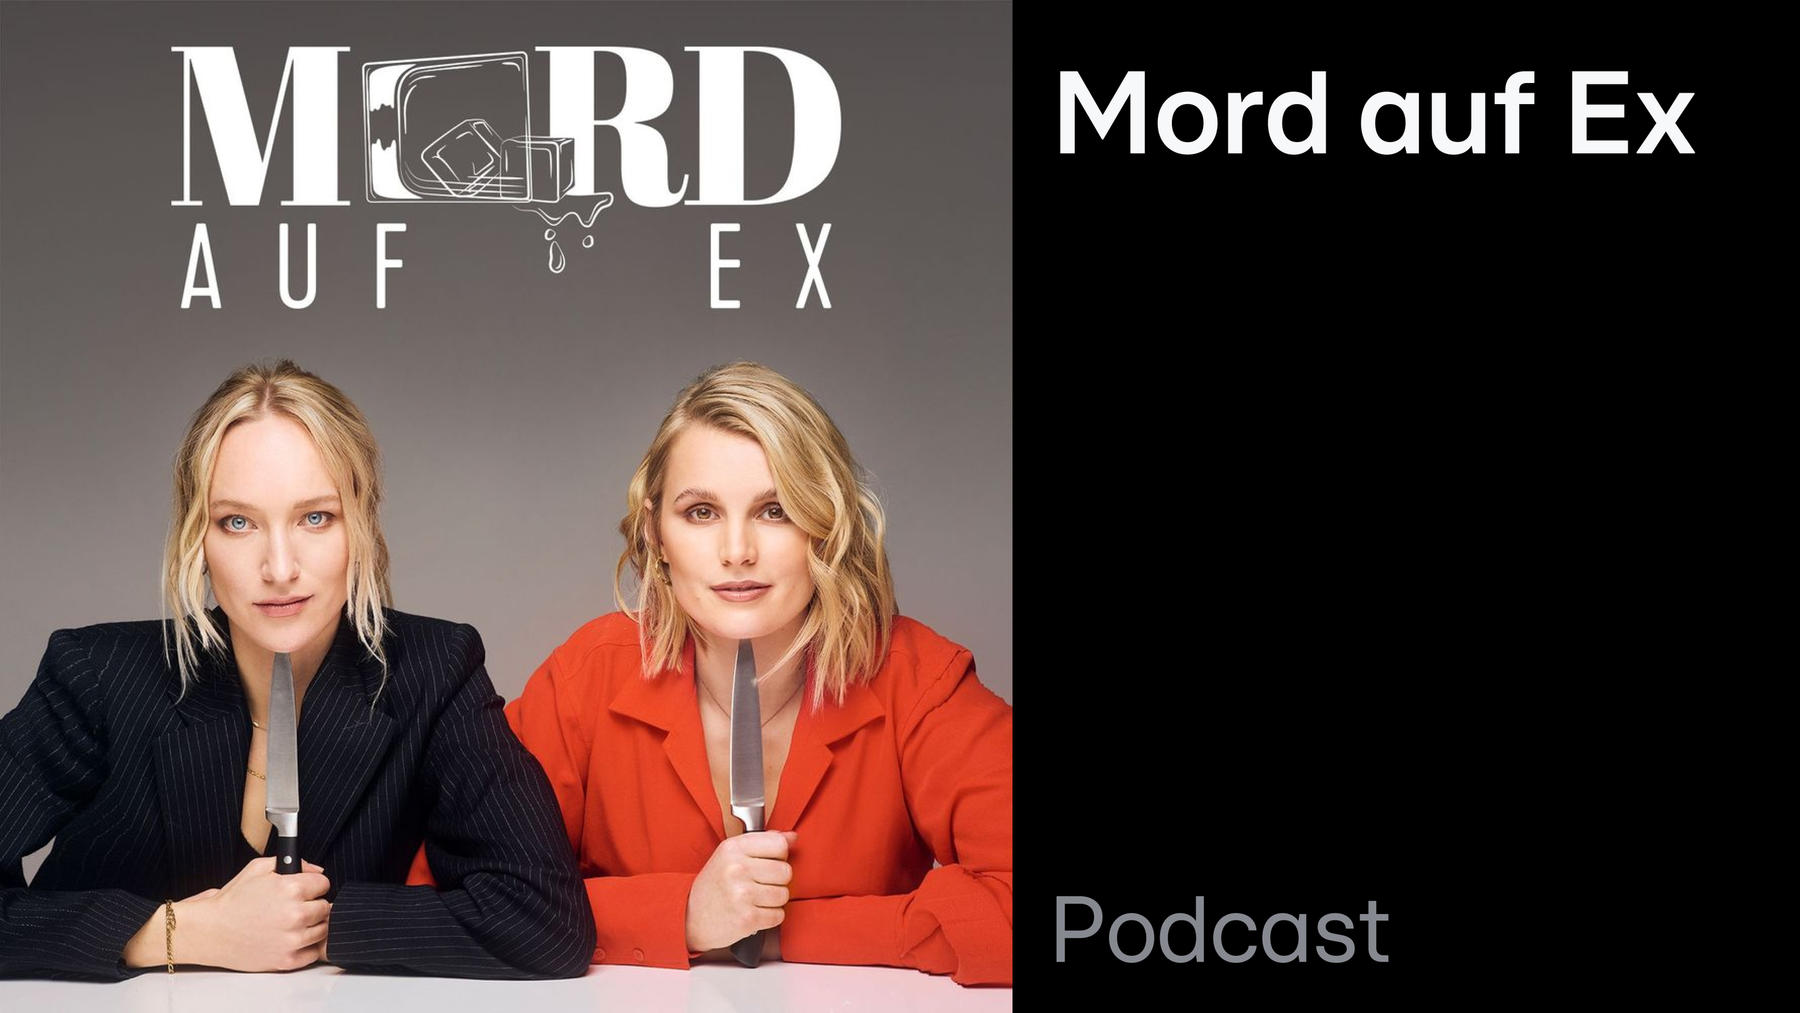 Podcast: Mord auf Ex